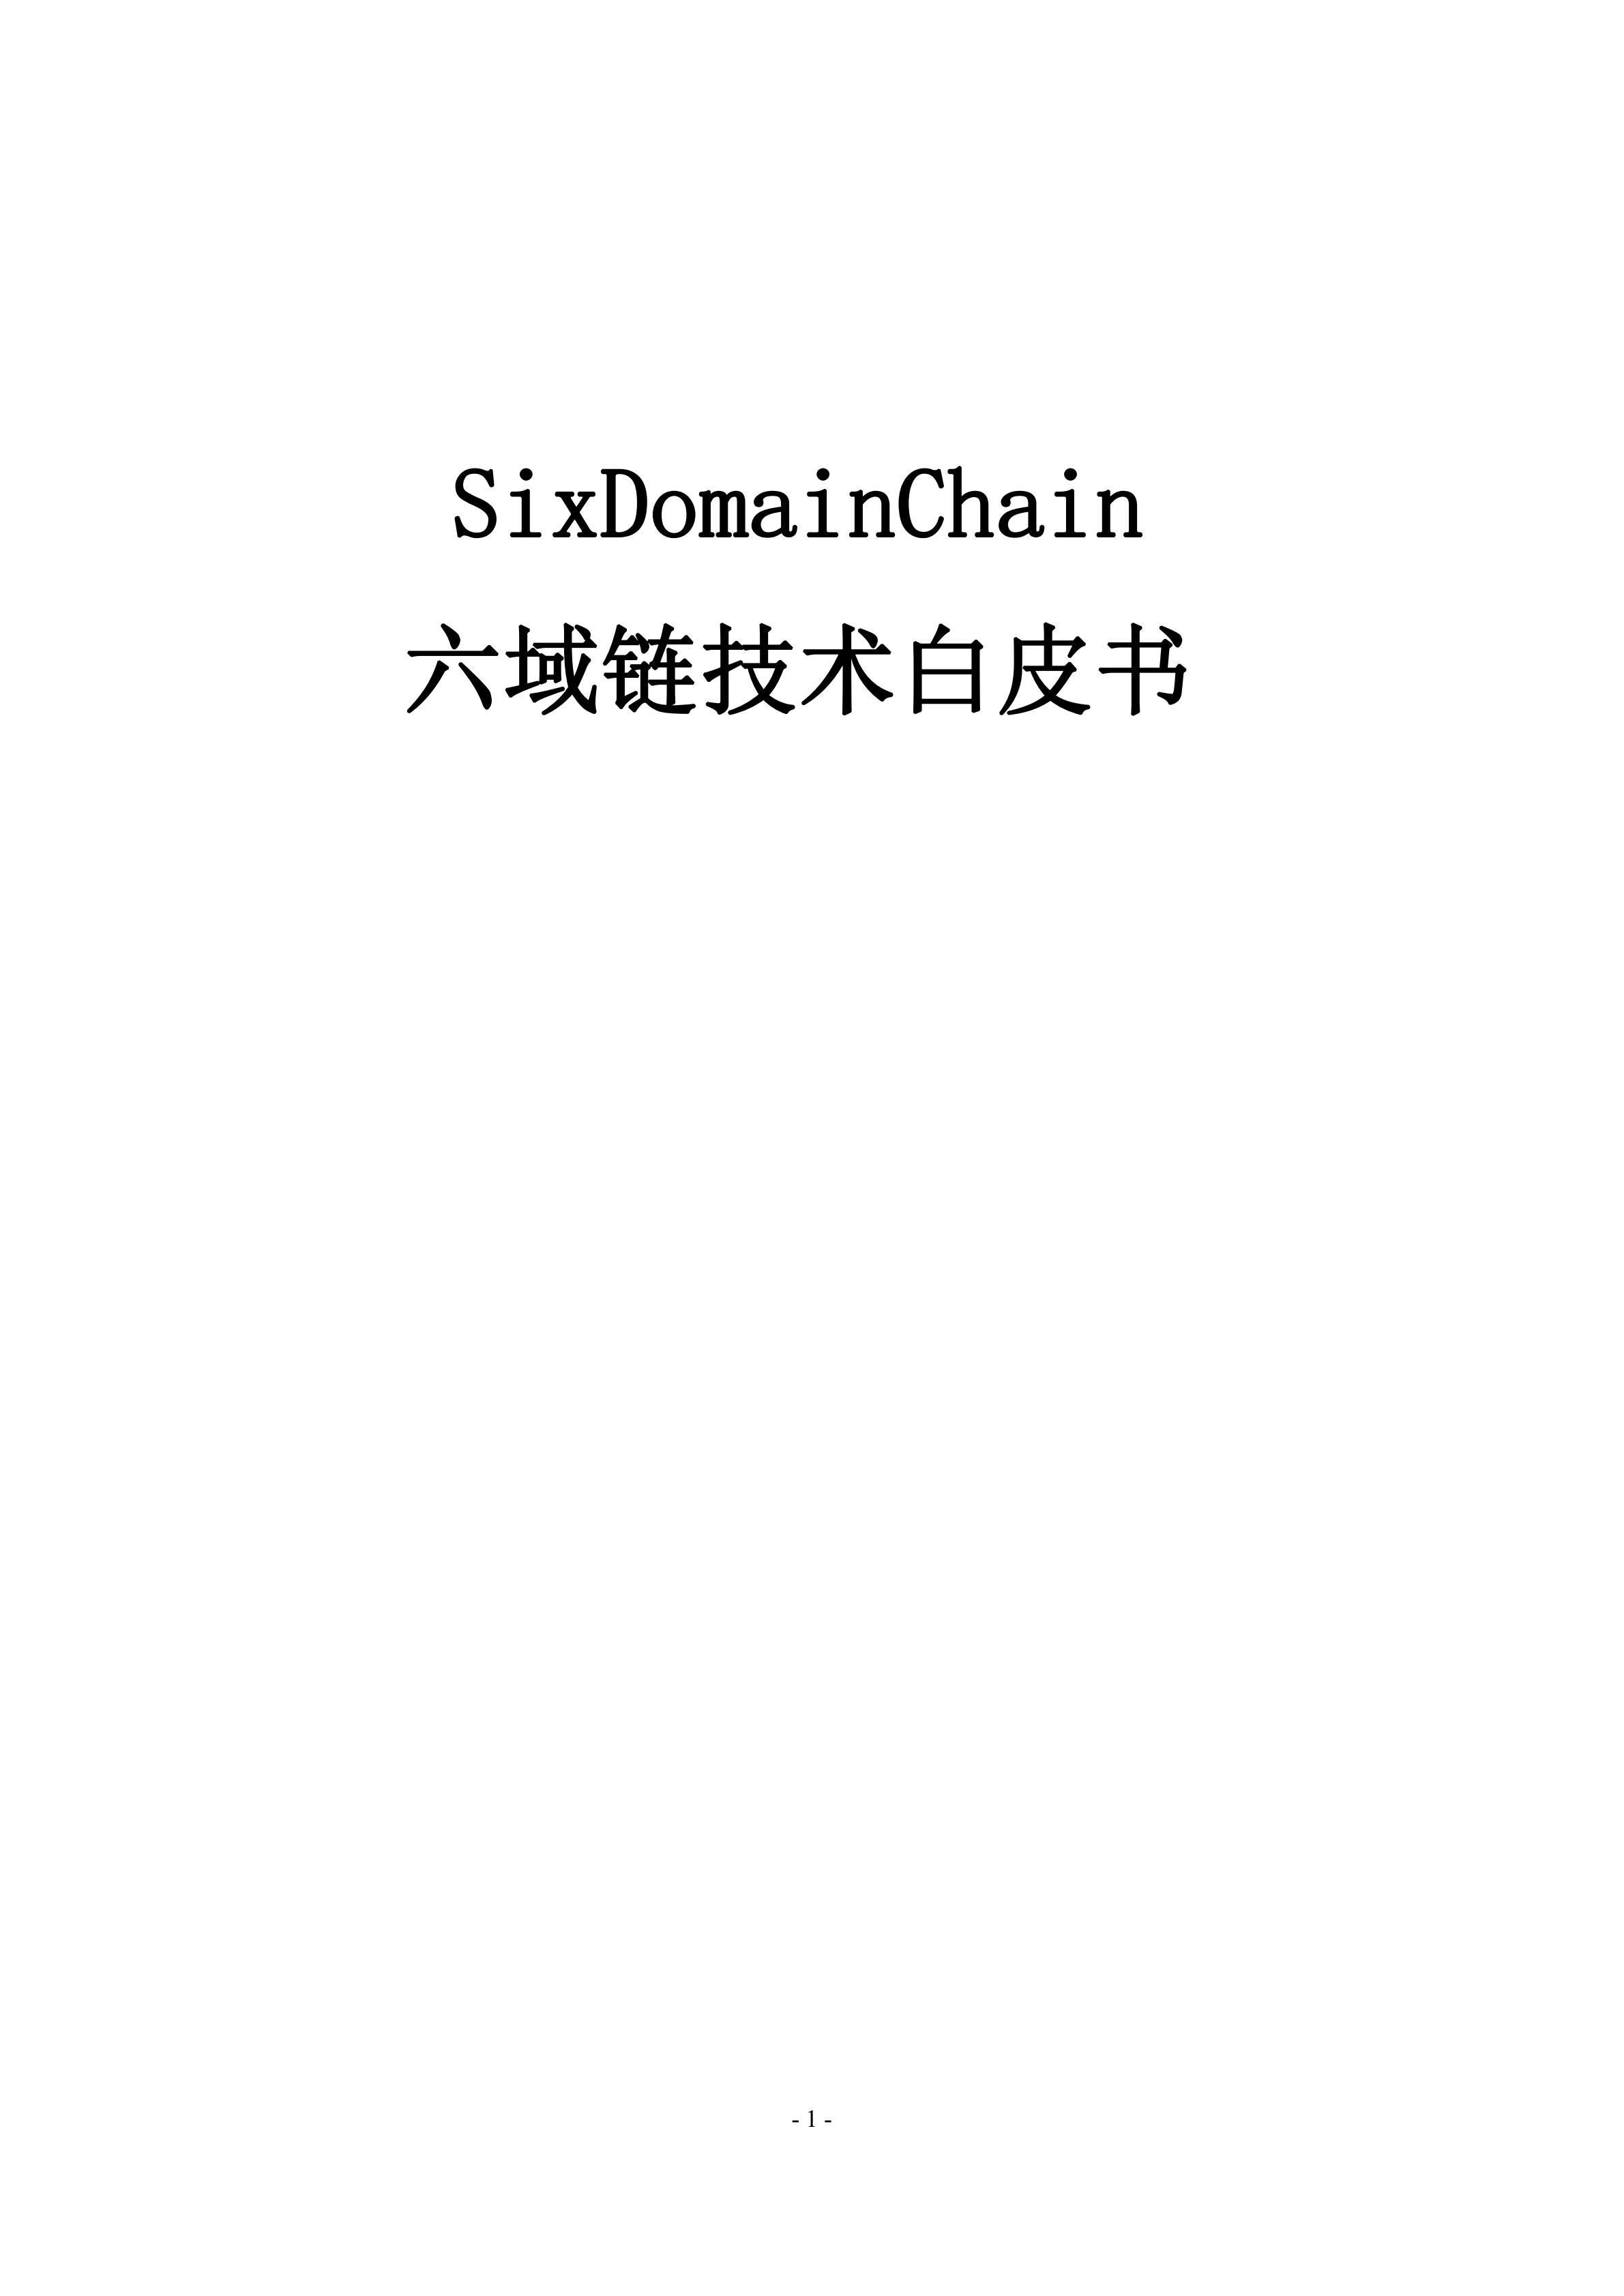 SDA_SixDomainChain_White Paper_CN_00.jpg